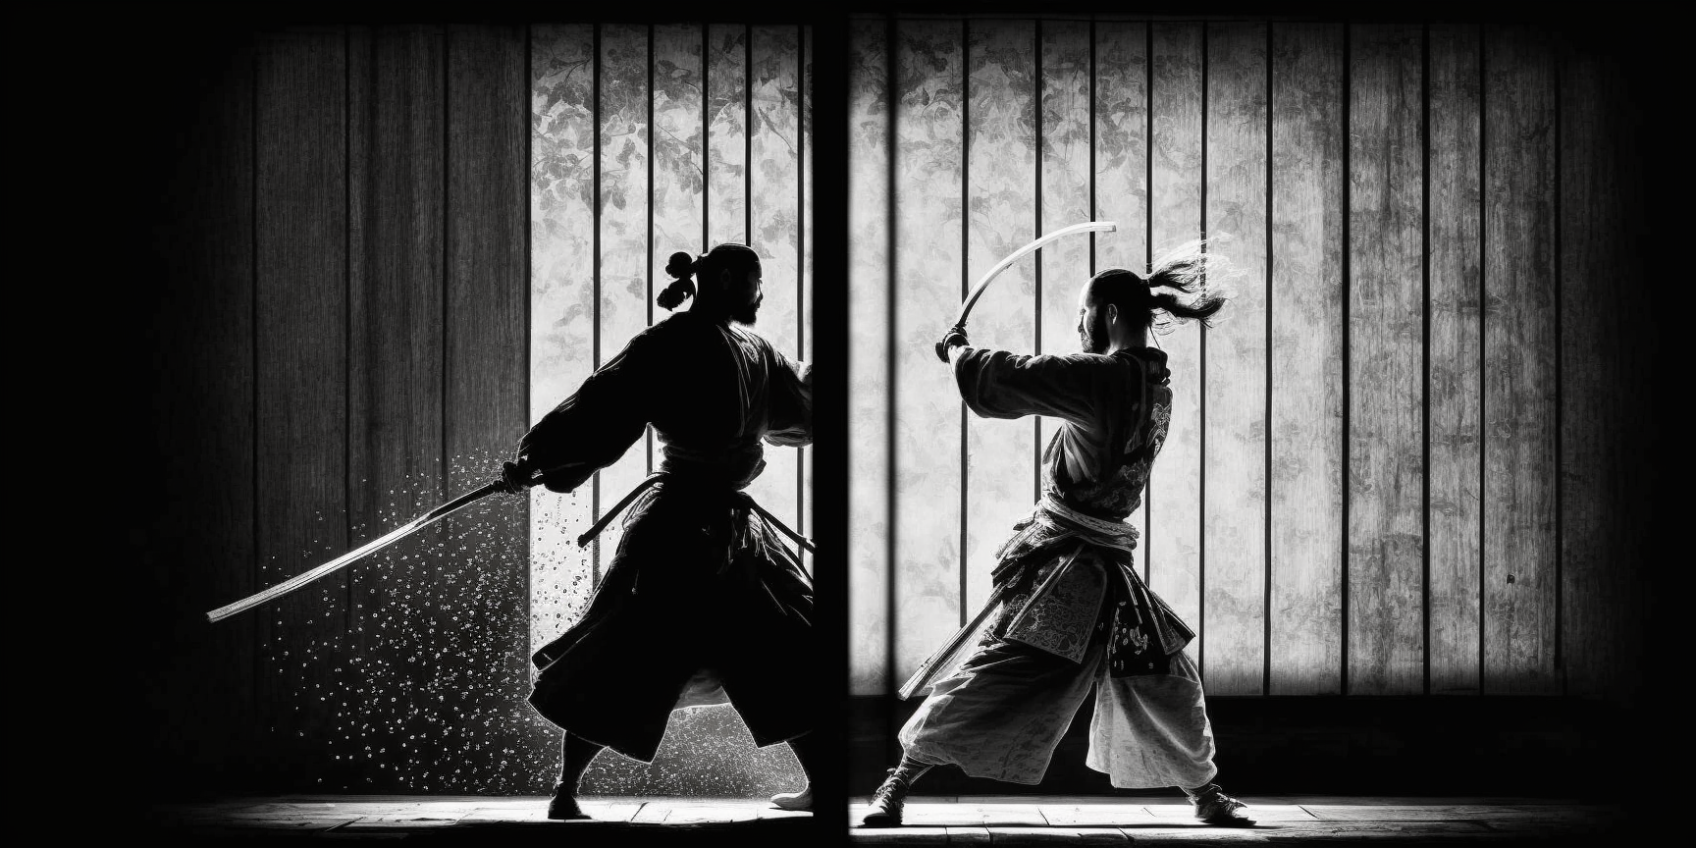 Jananese Samurai Swords: Representative of the Soul of the Samurai